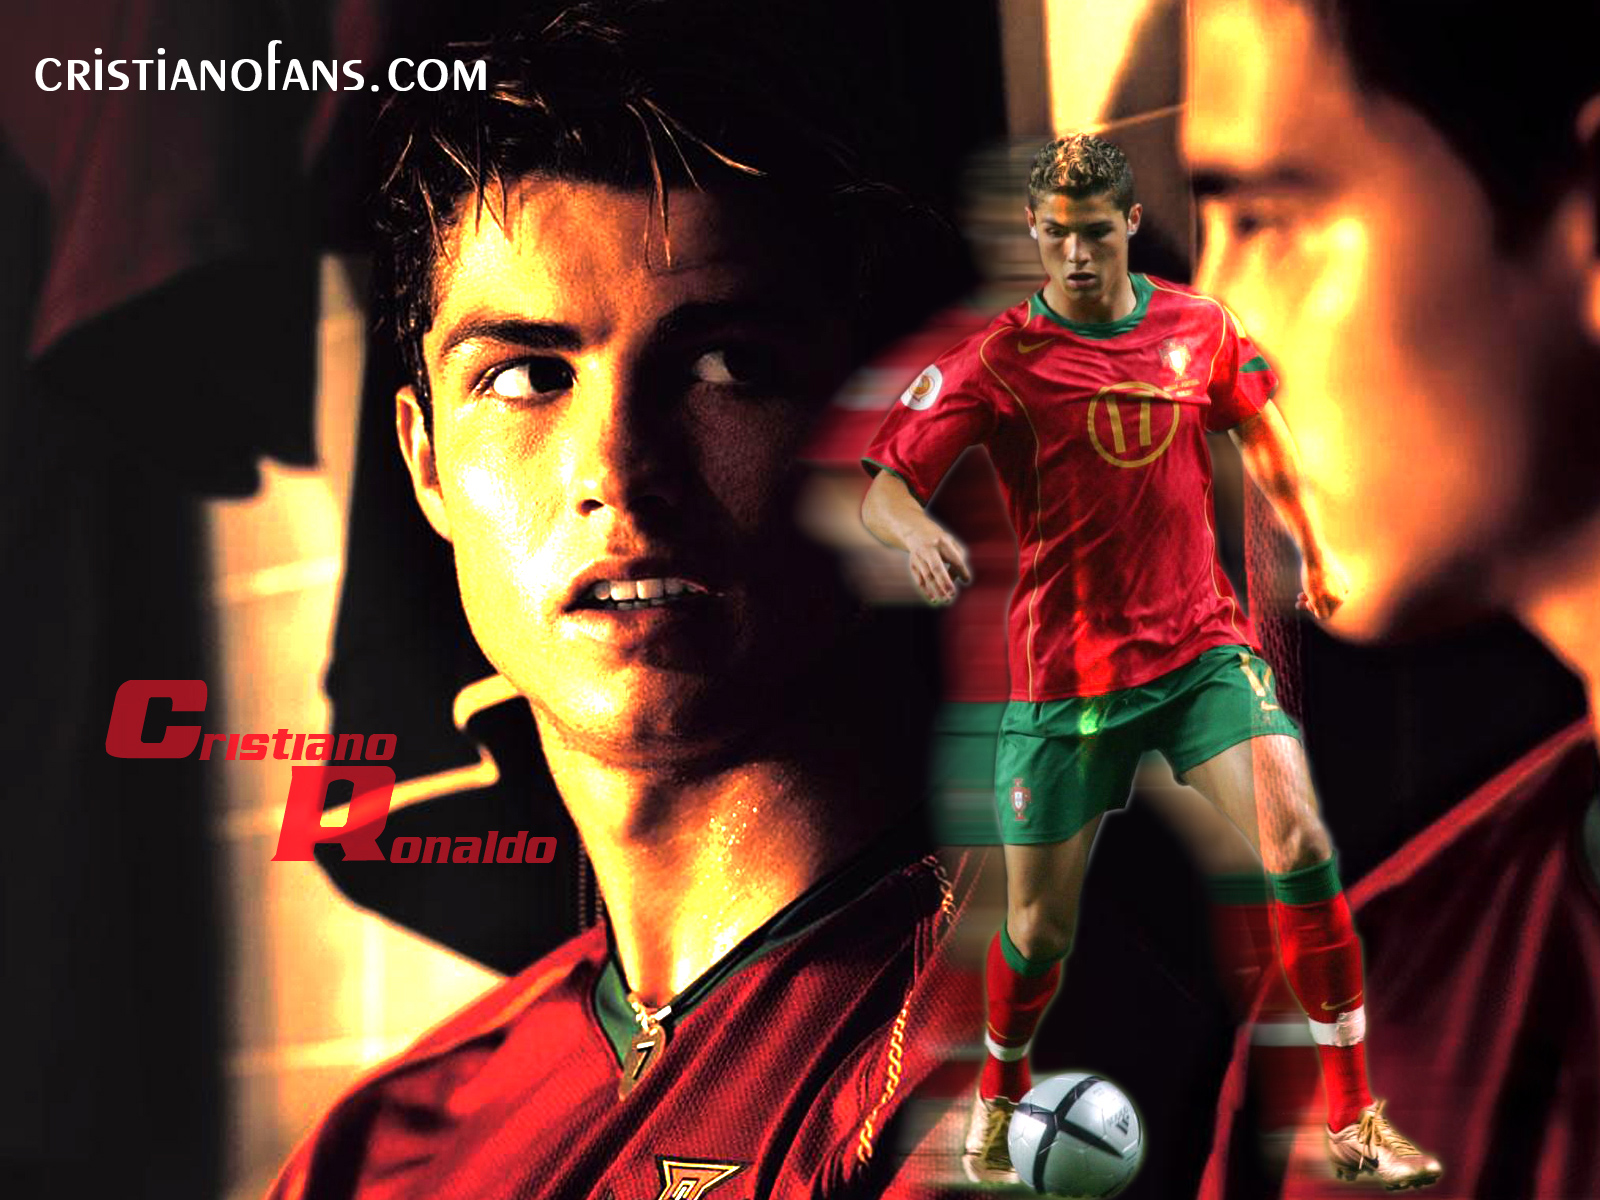 http://4.bp.blogspot.com/-nD42g08Qem0/TconeE5zggI/AAAAAAAAAJQ/vgEqLpbfZ9I/s1600/Cristiano-Ronaldo-Wallpaper-7.jpg